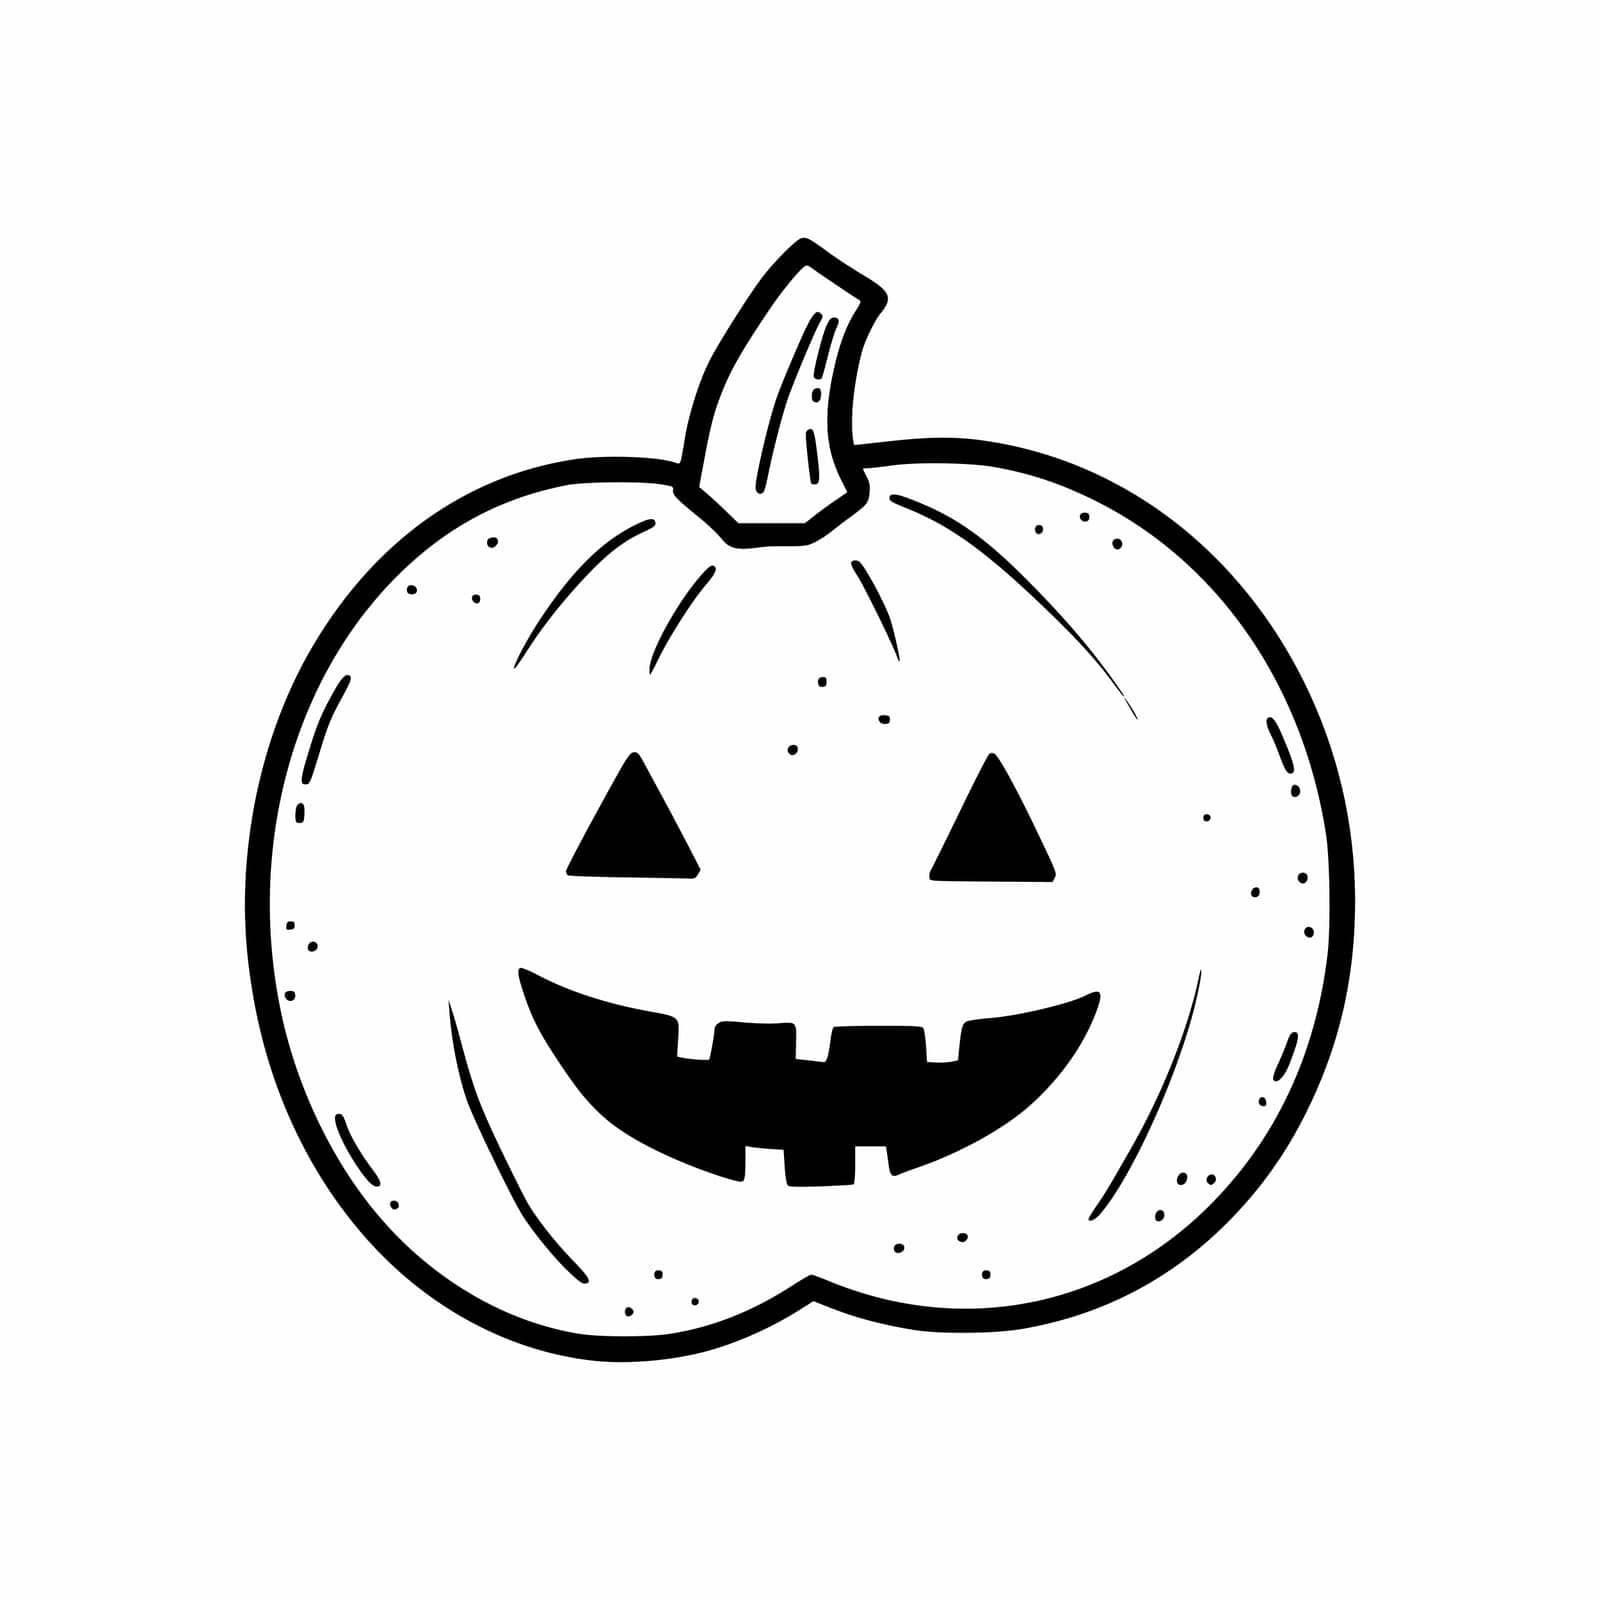 Pumpkin for Halloween. Autumn harvest. Sketch. Vector doodle illustration. Postcard decor element.